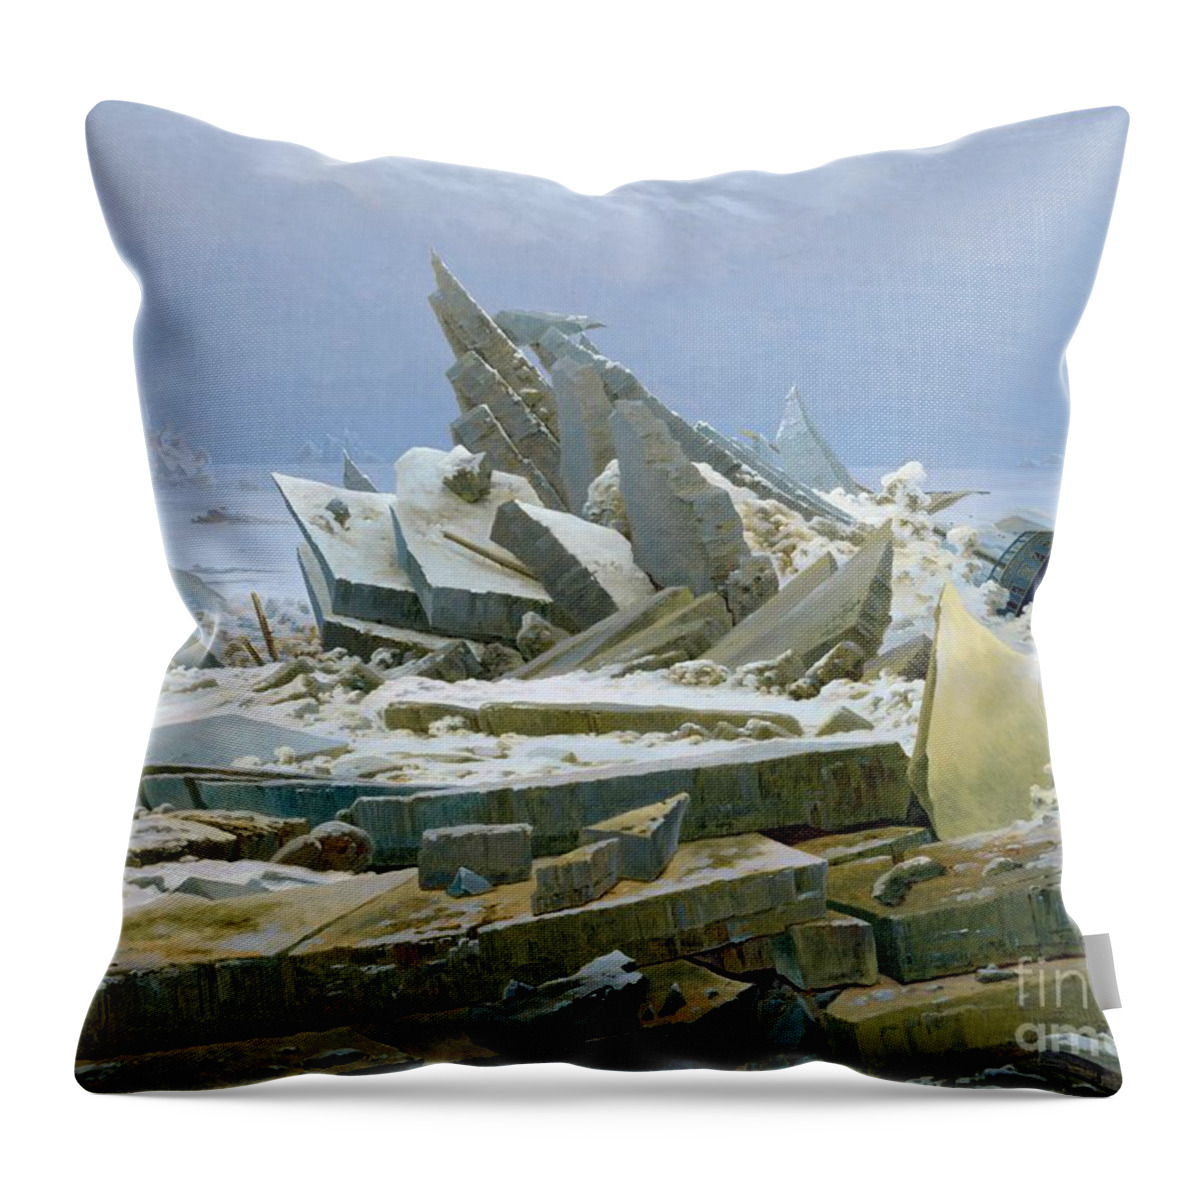 The Throw Pillow featuring the painting The Polar Sea by Caspar David Friedrich